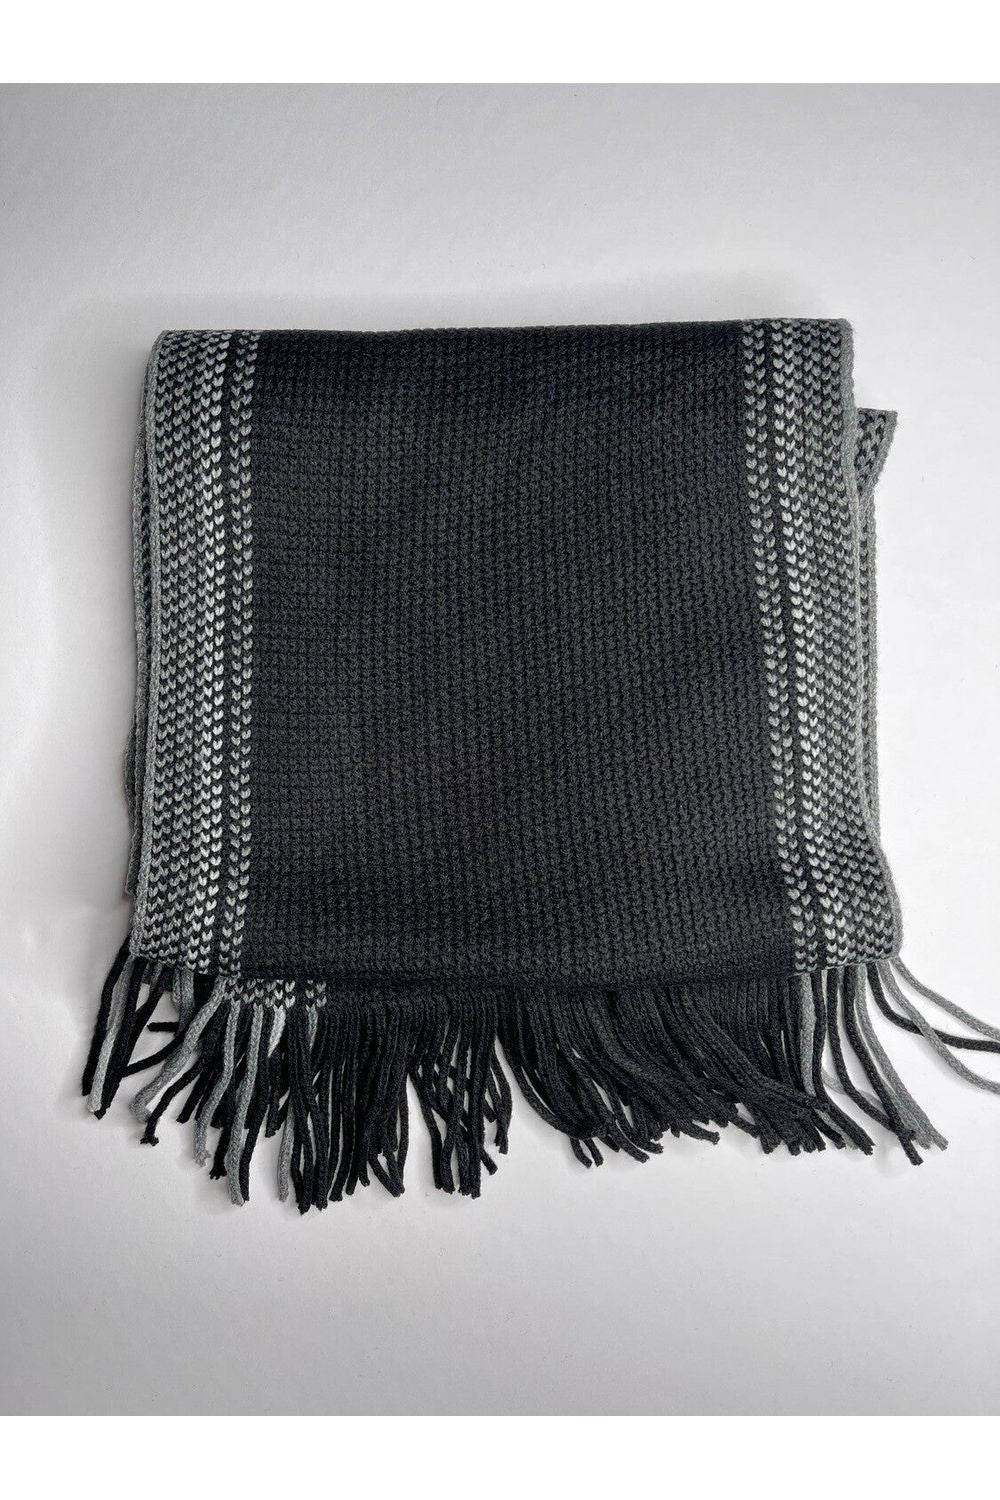 Men's rectangular knitted scarf